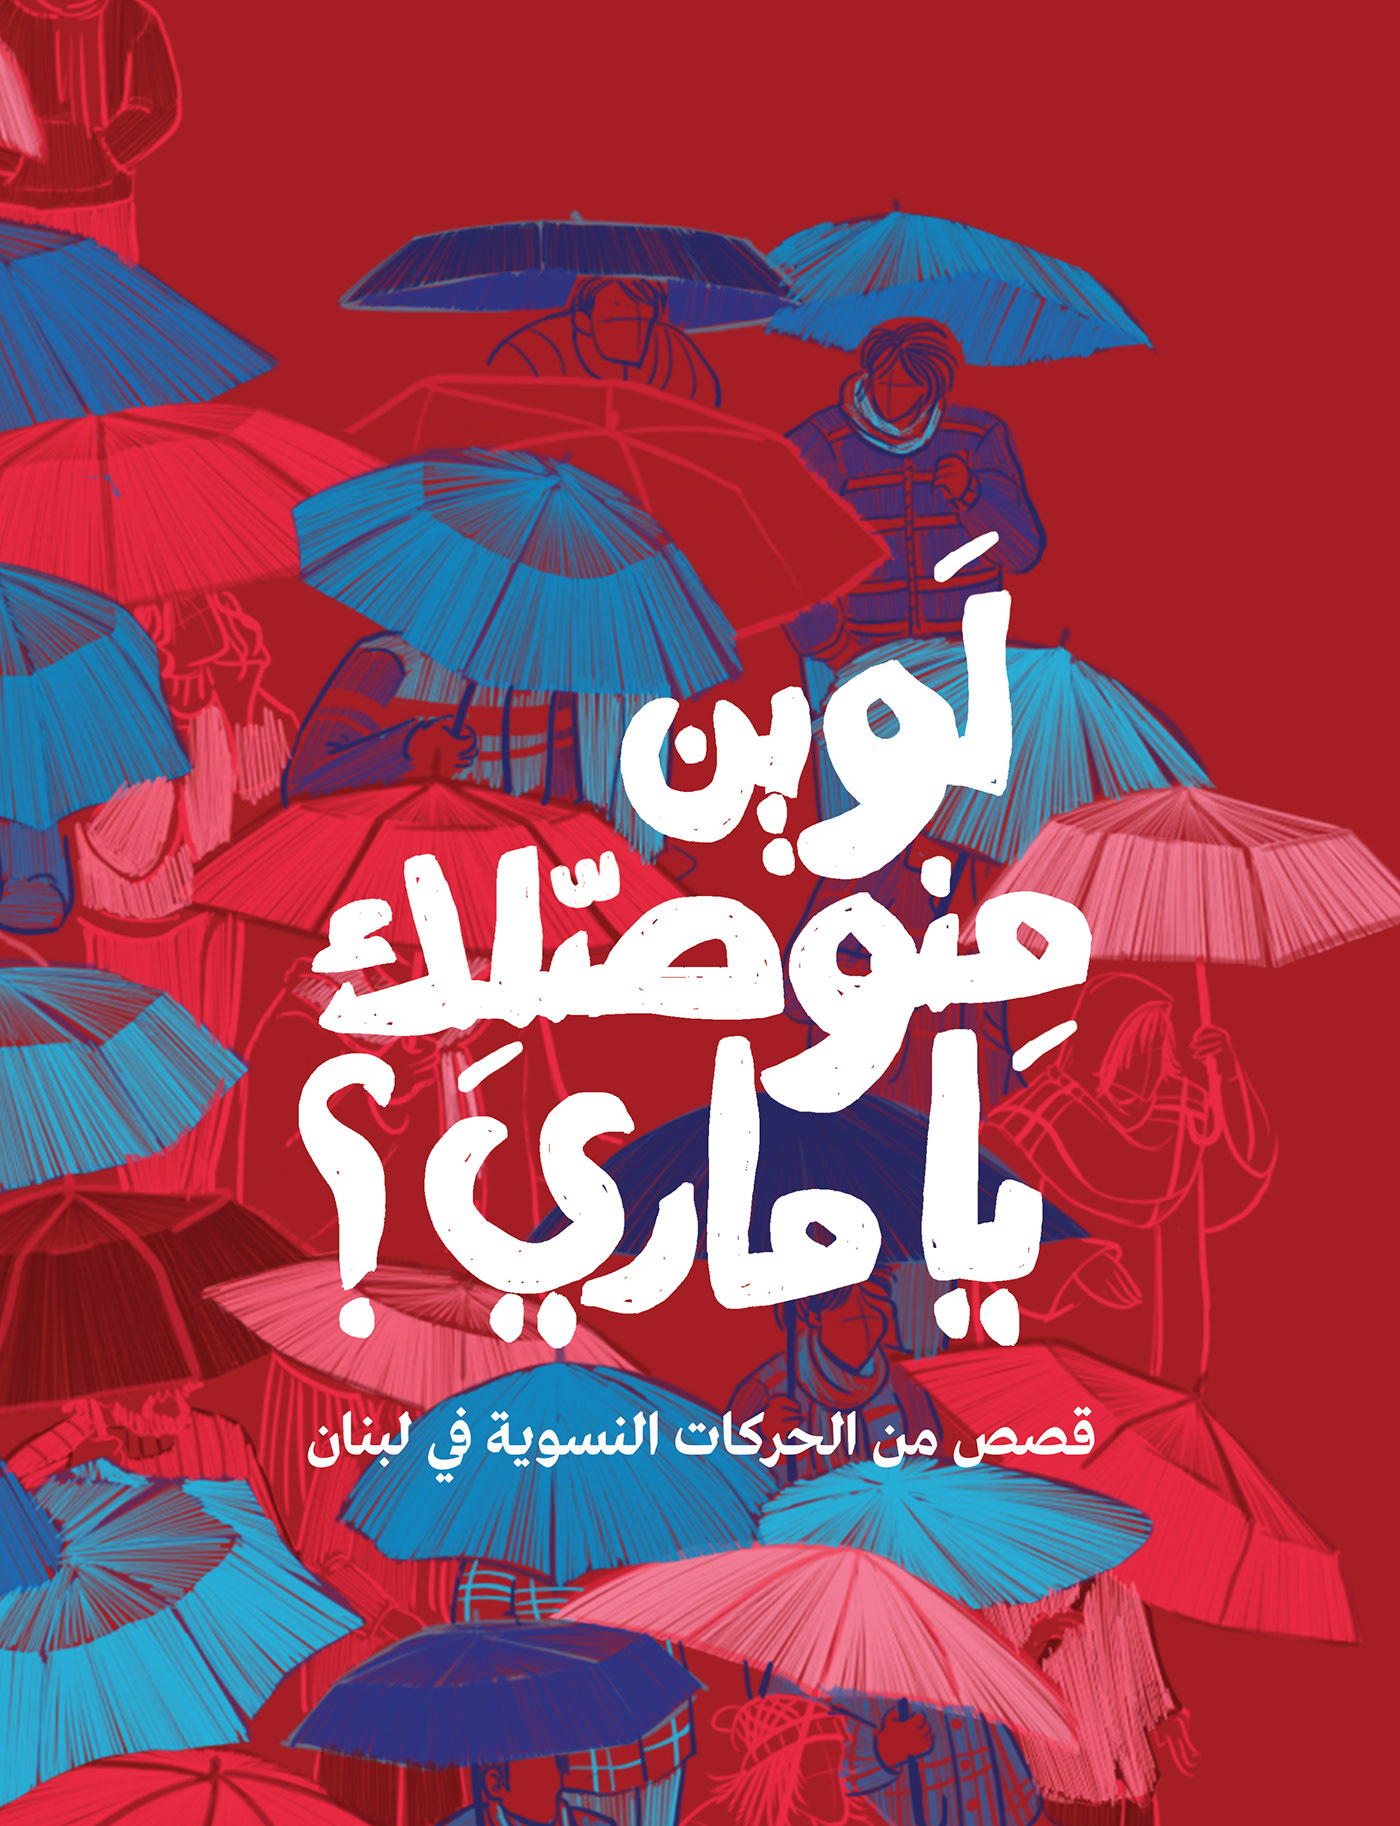 Image may contain: cartoon, umbrella and poster